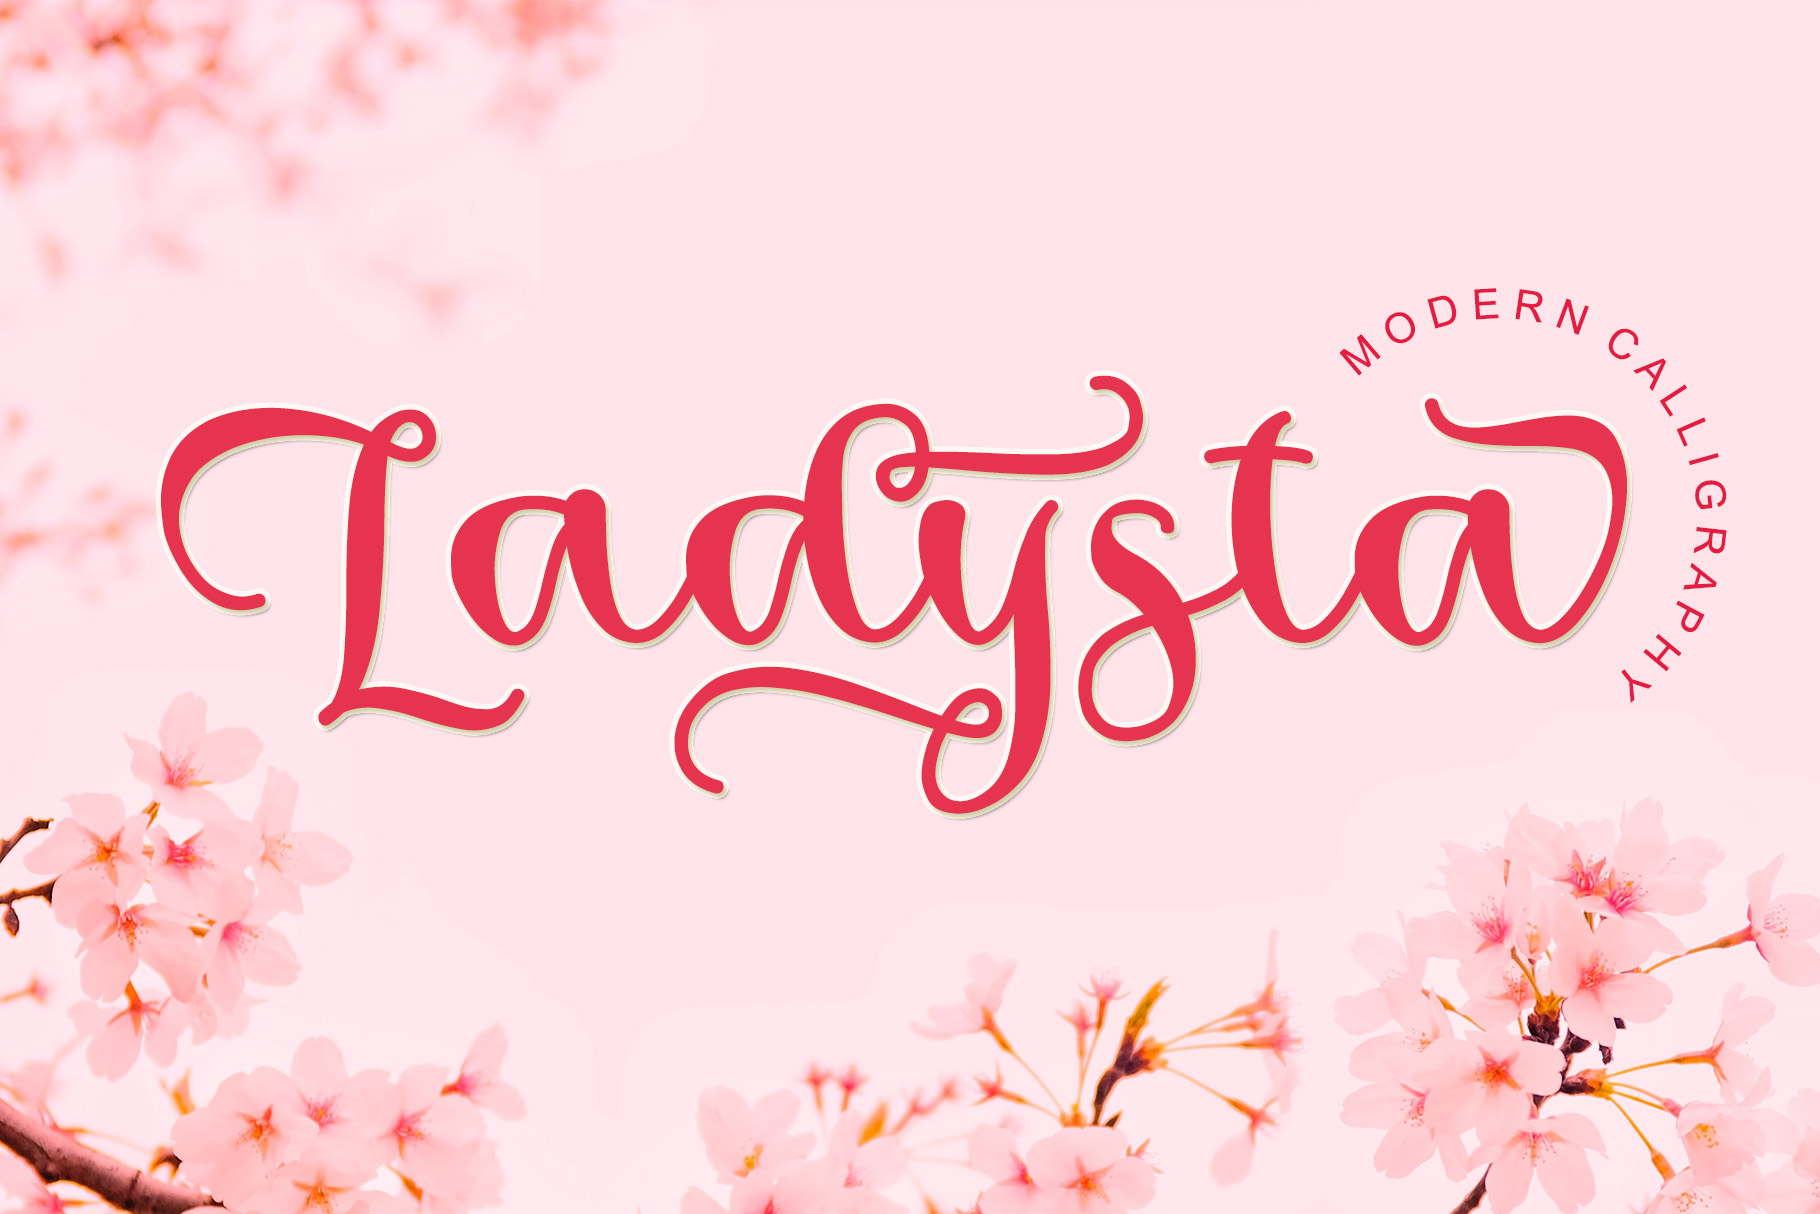 Ladysta